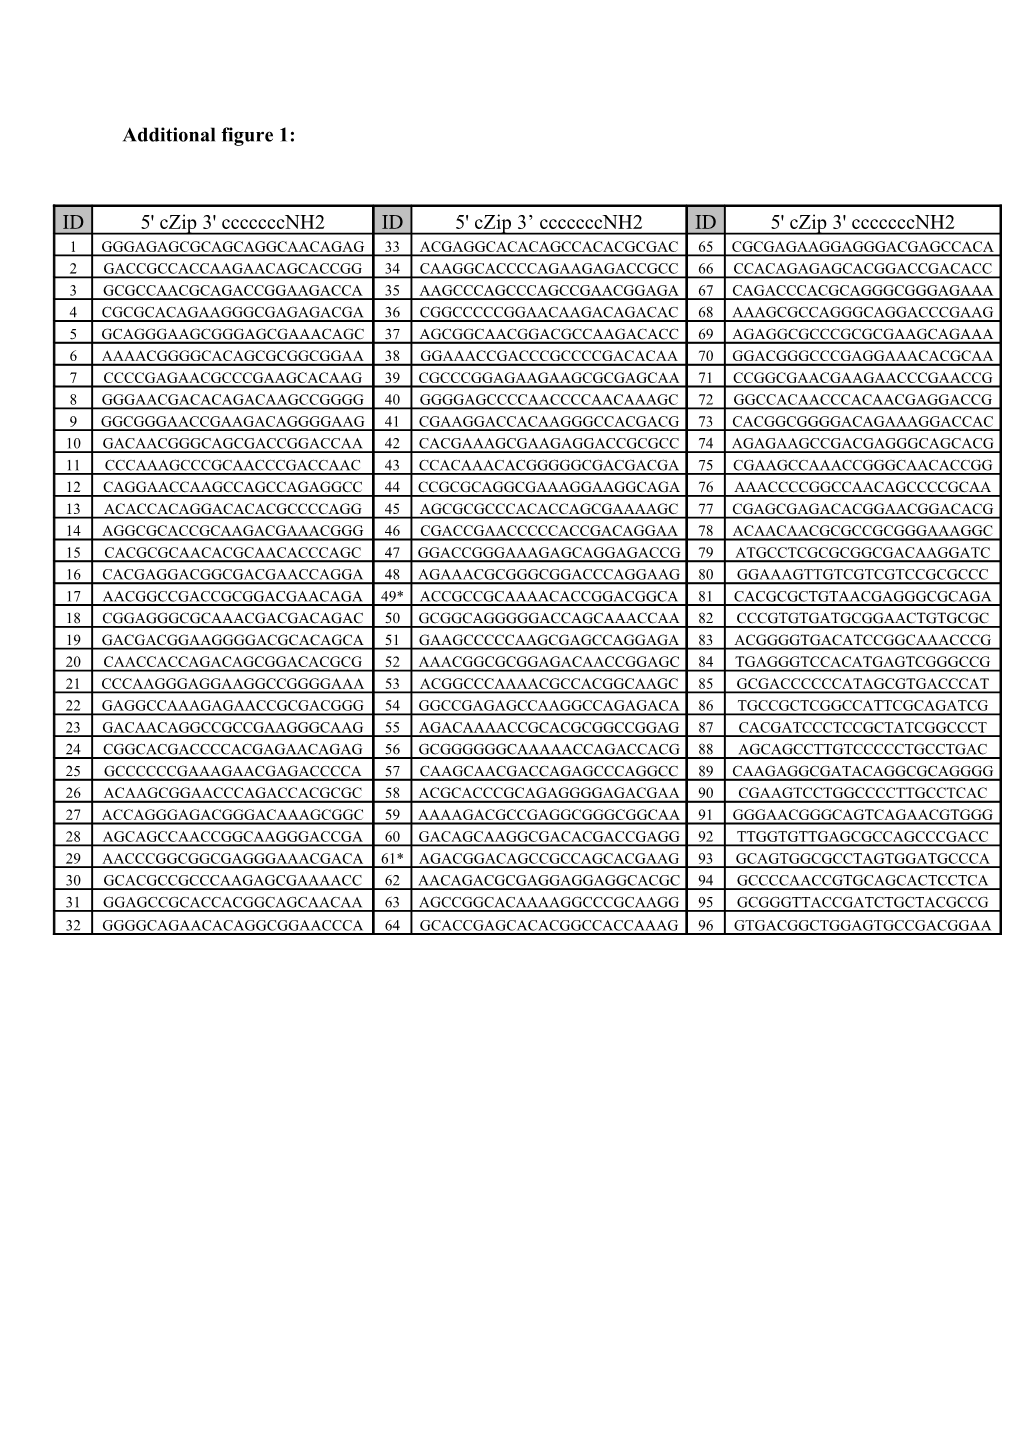 Table 1: List of the Zip Code